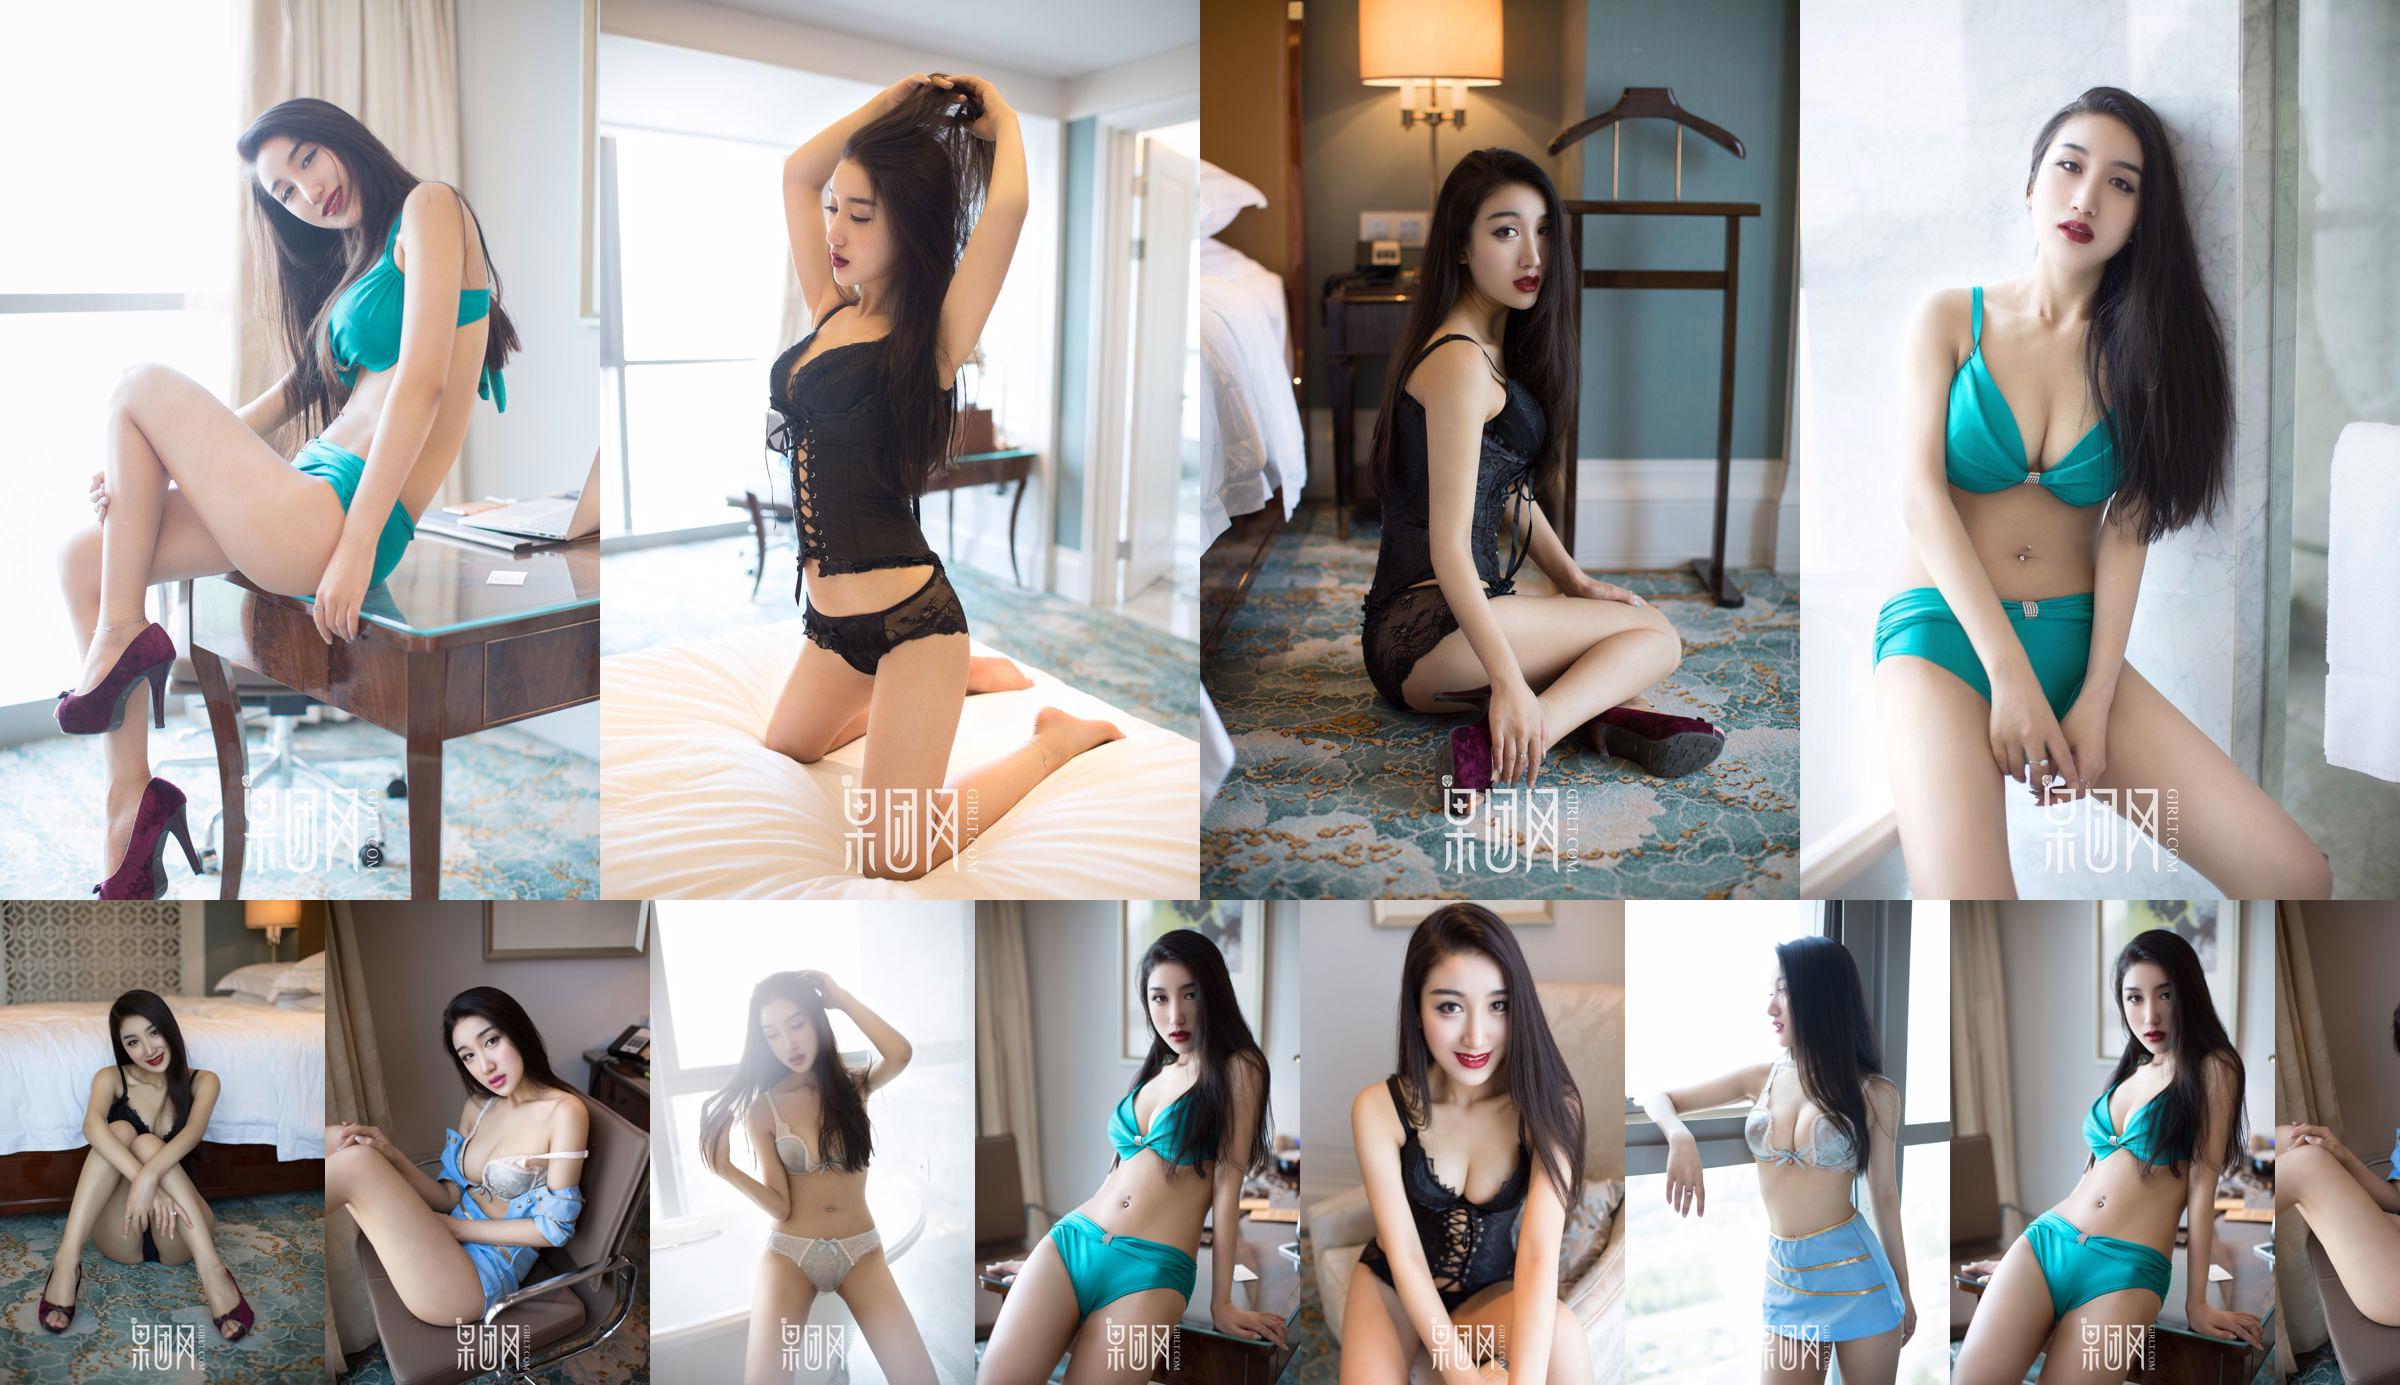 Wang Zheng "Vent chaud sexy" [Girlt] No.050 No.08bd0d Page 1